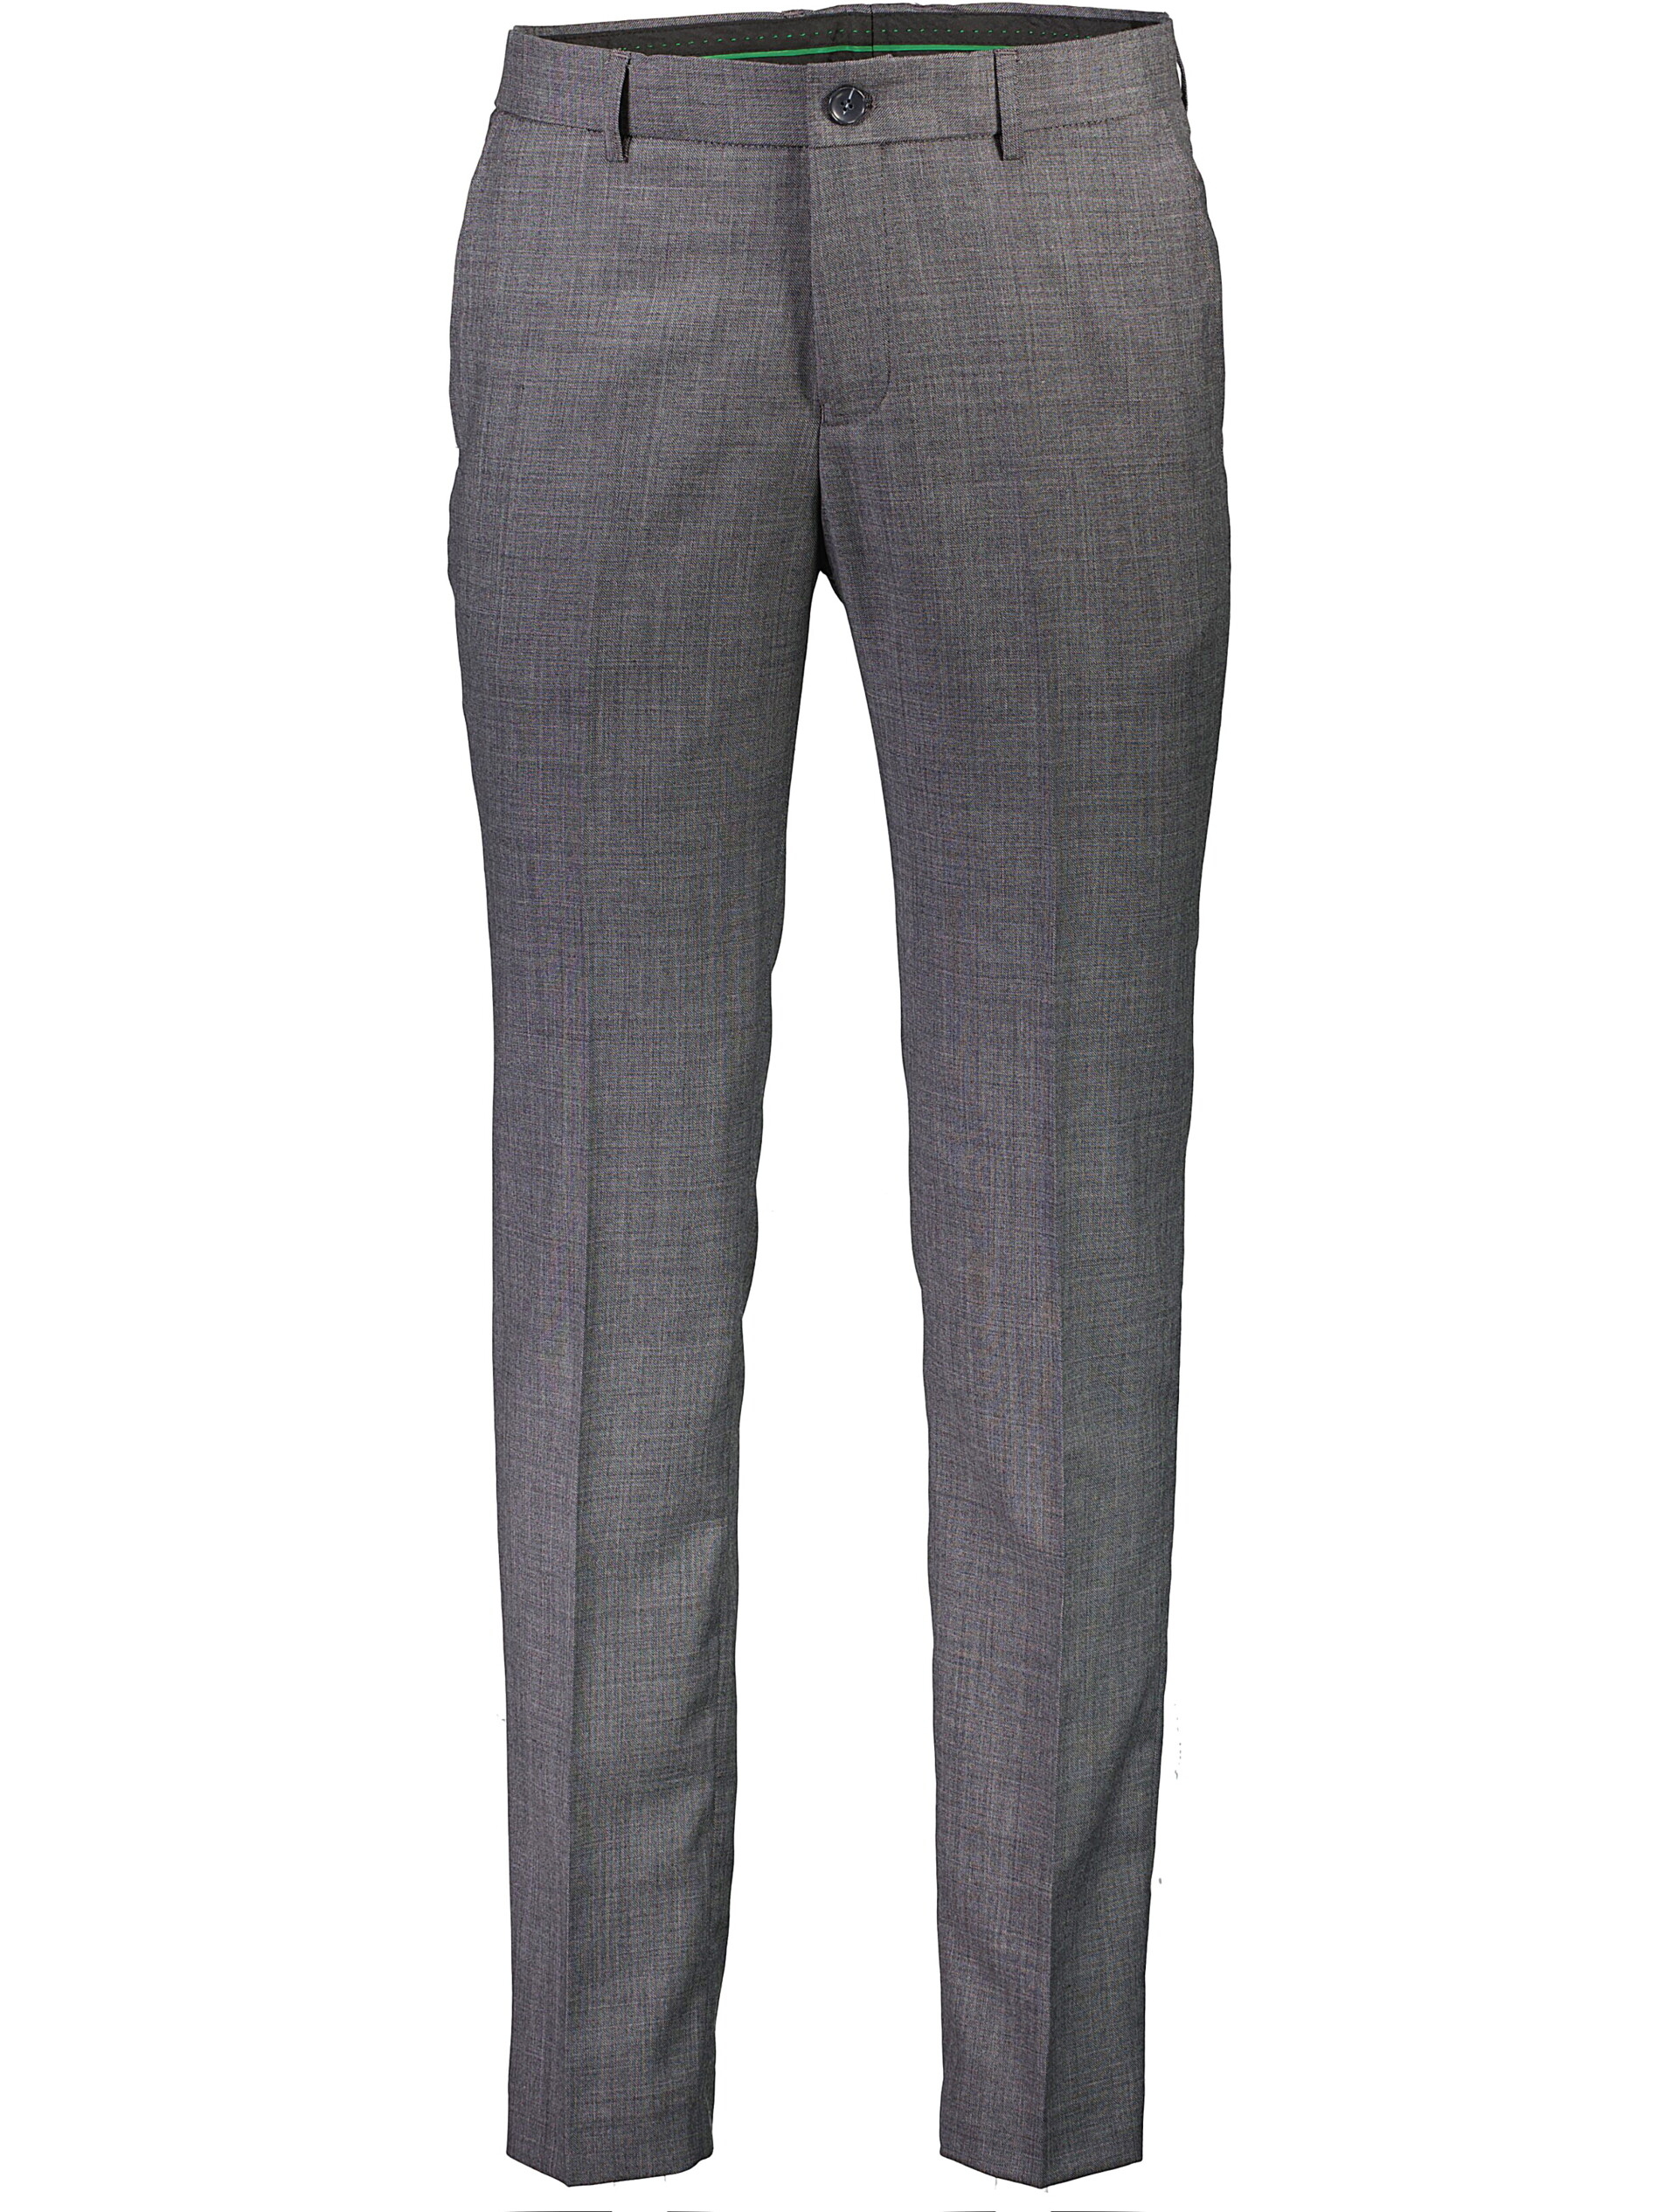 Lindbergh Suit pants grey / dk grey mel